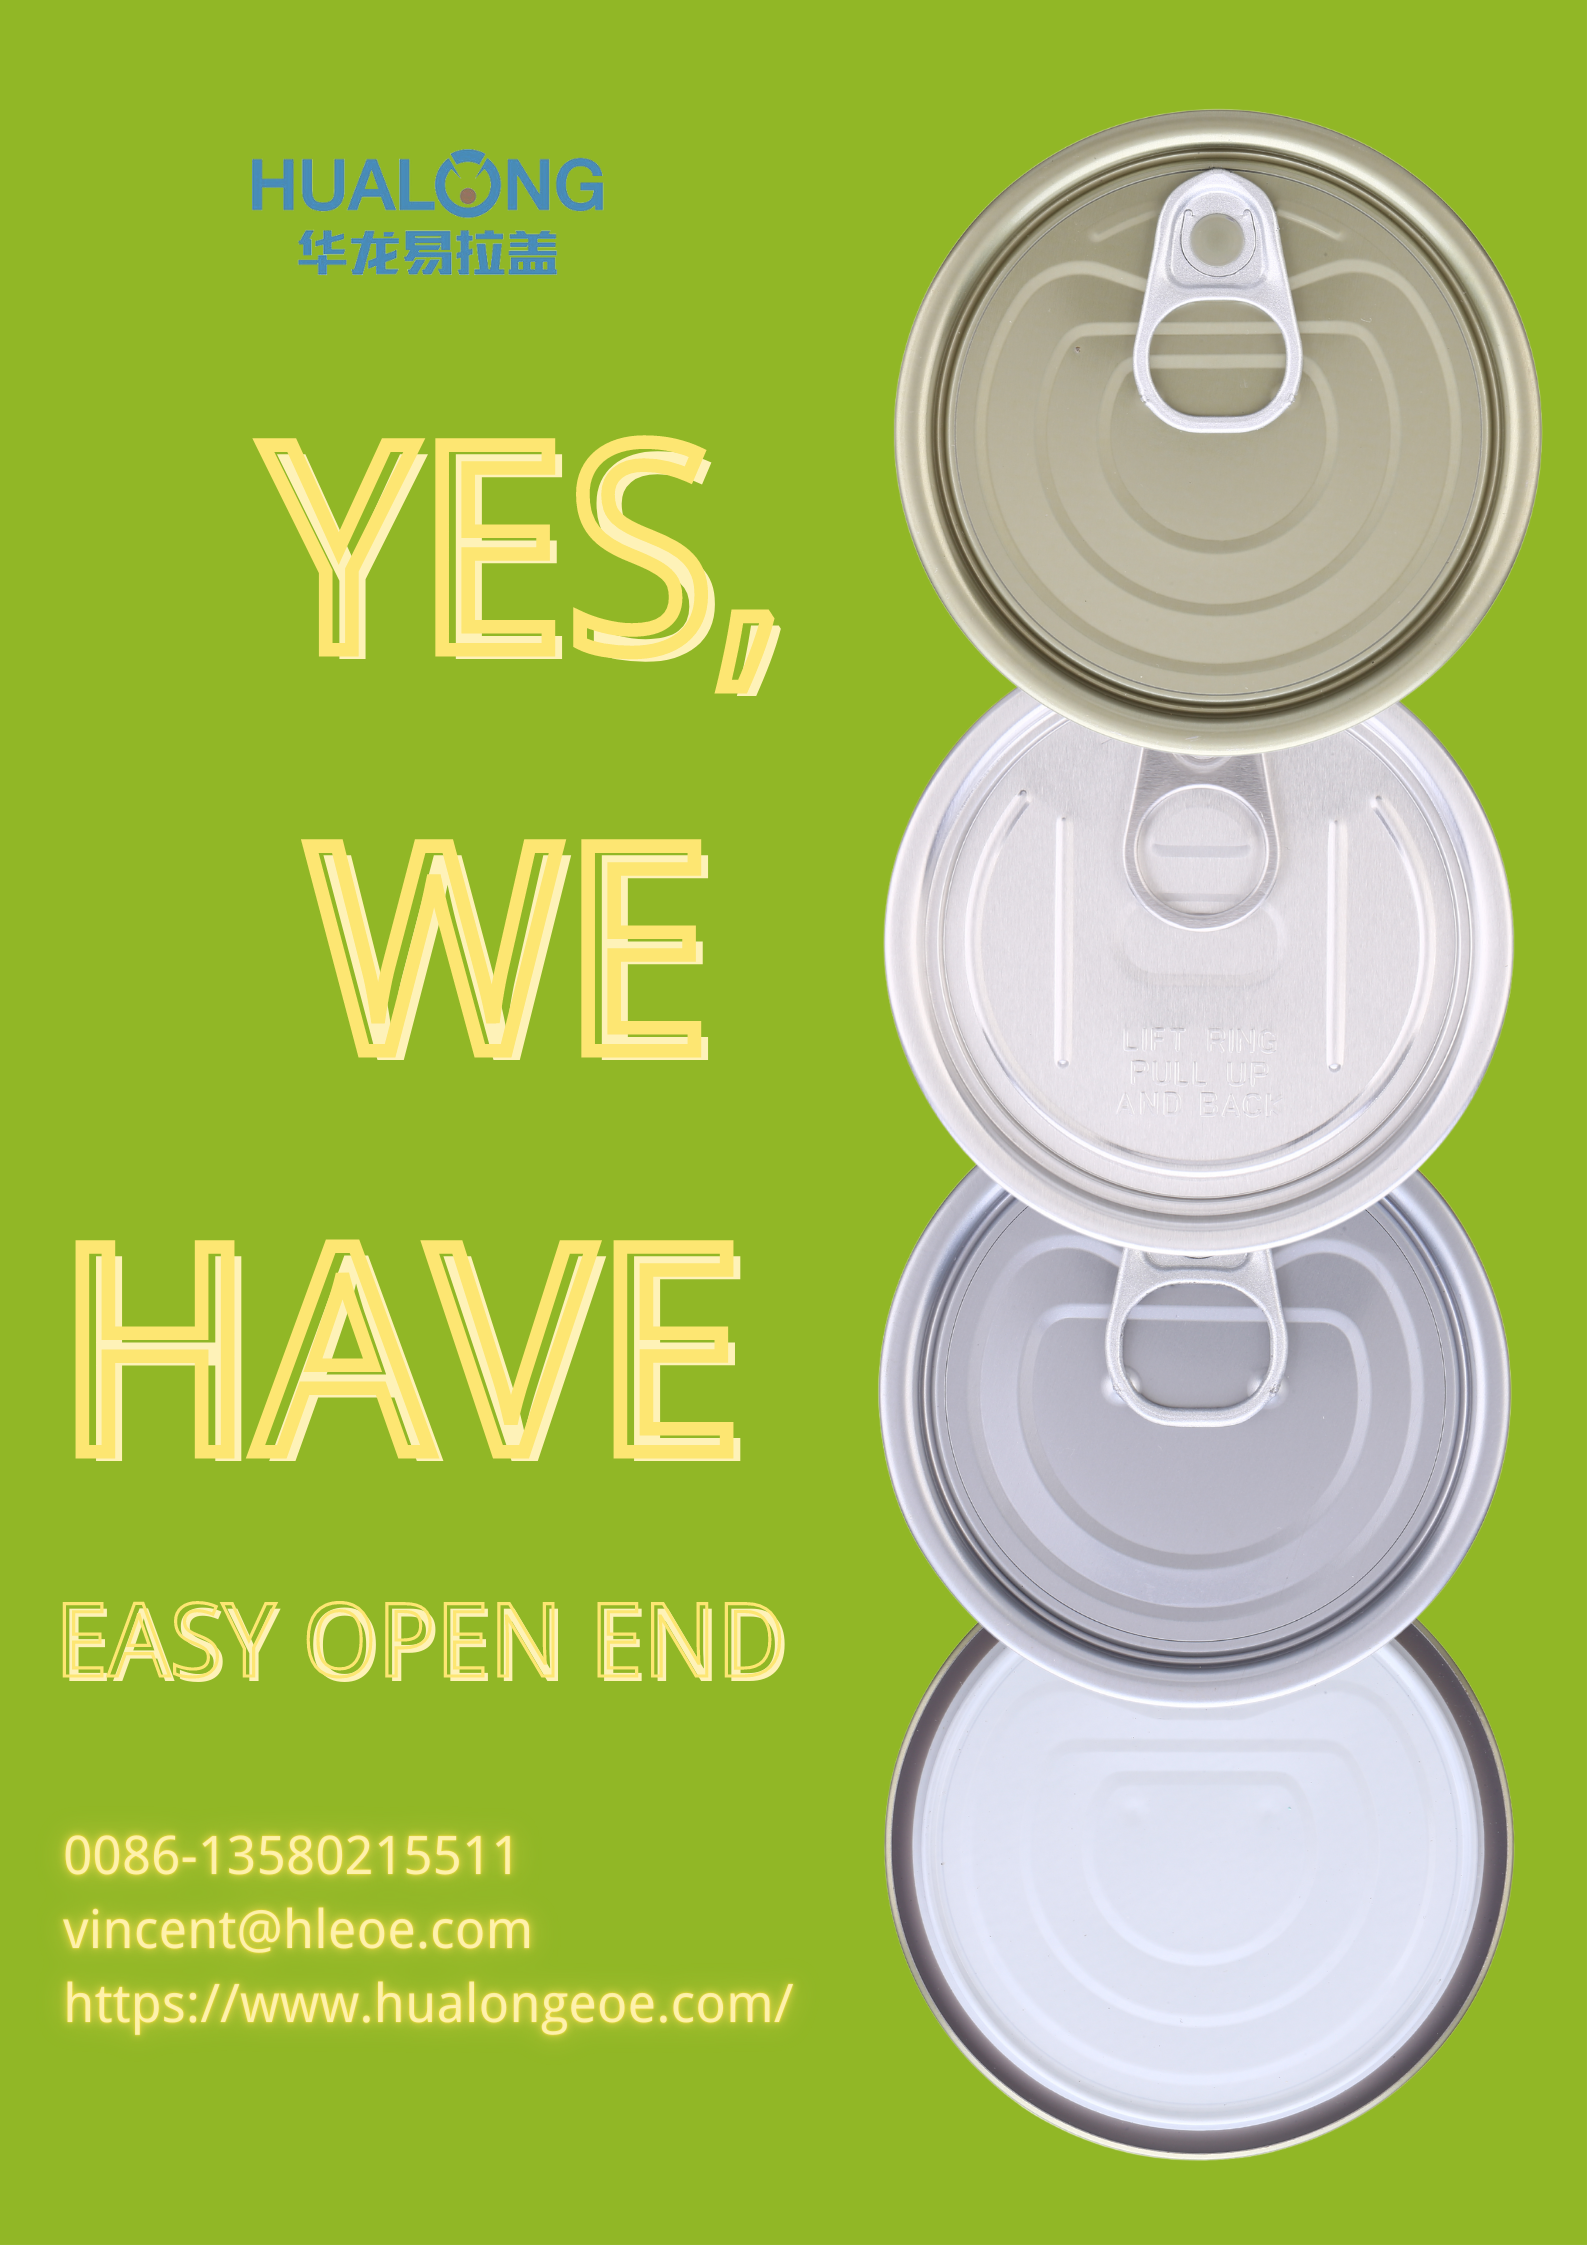 Hualong Easy Open End: Avem toate dimensiunile de care aveți nevoie